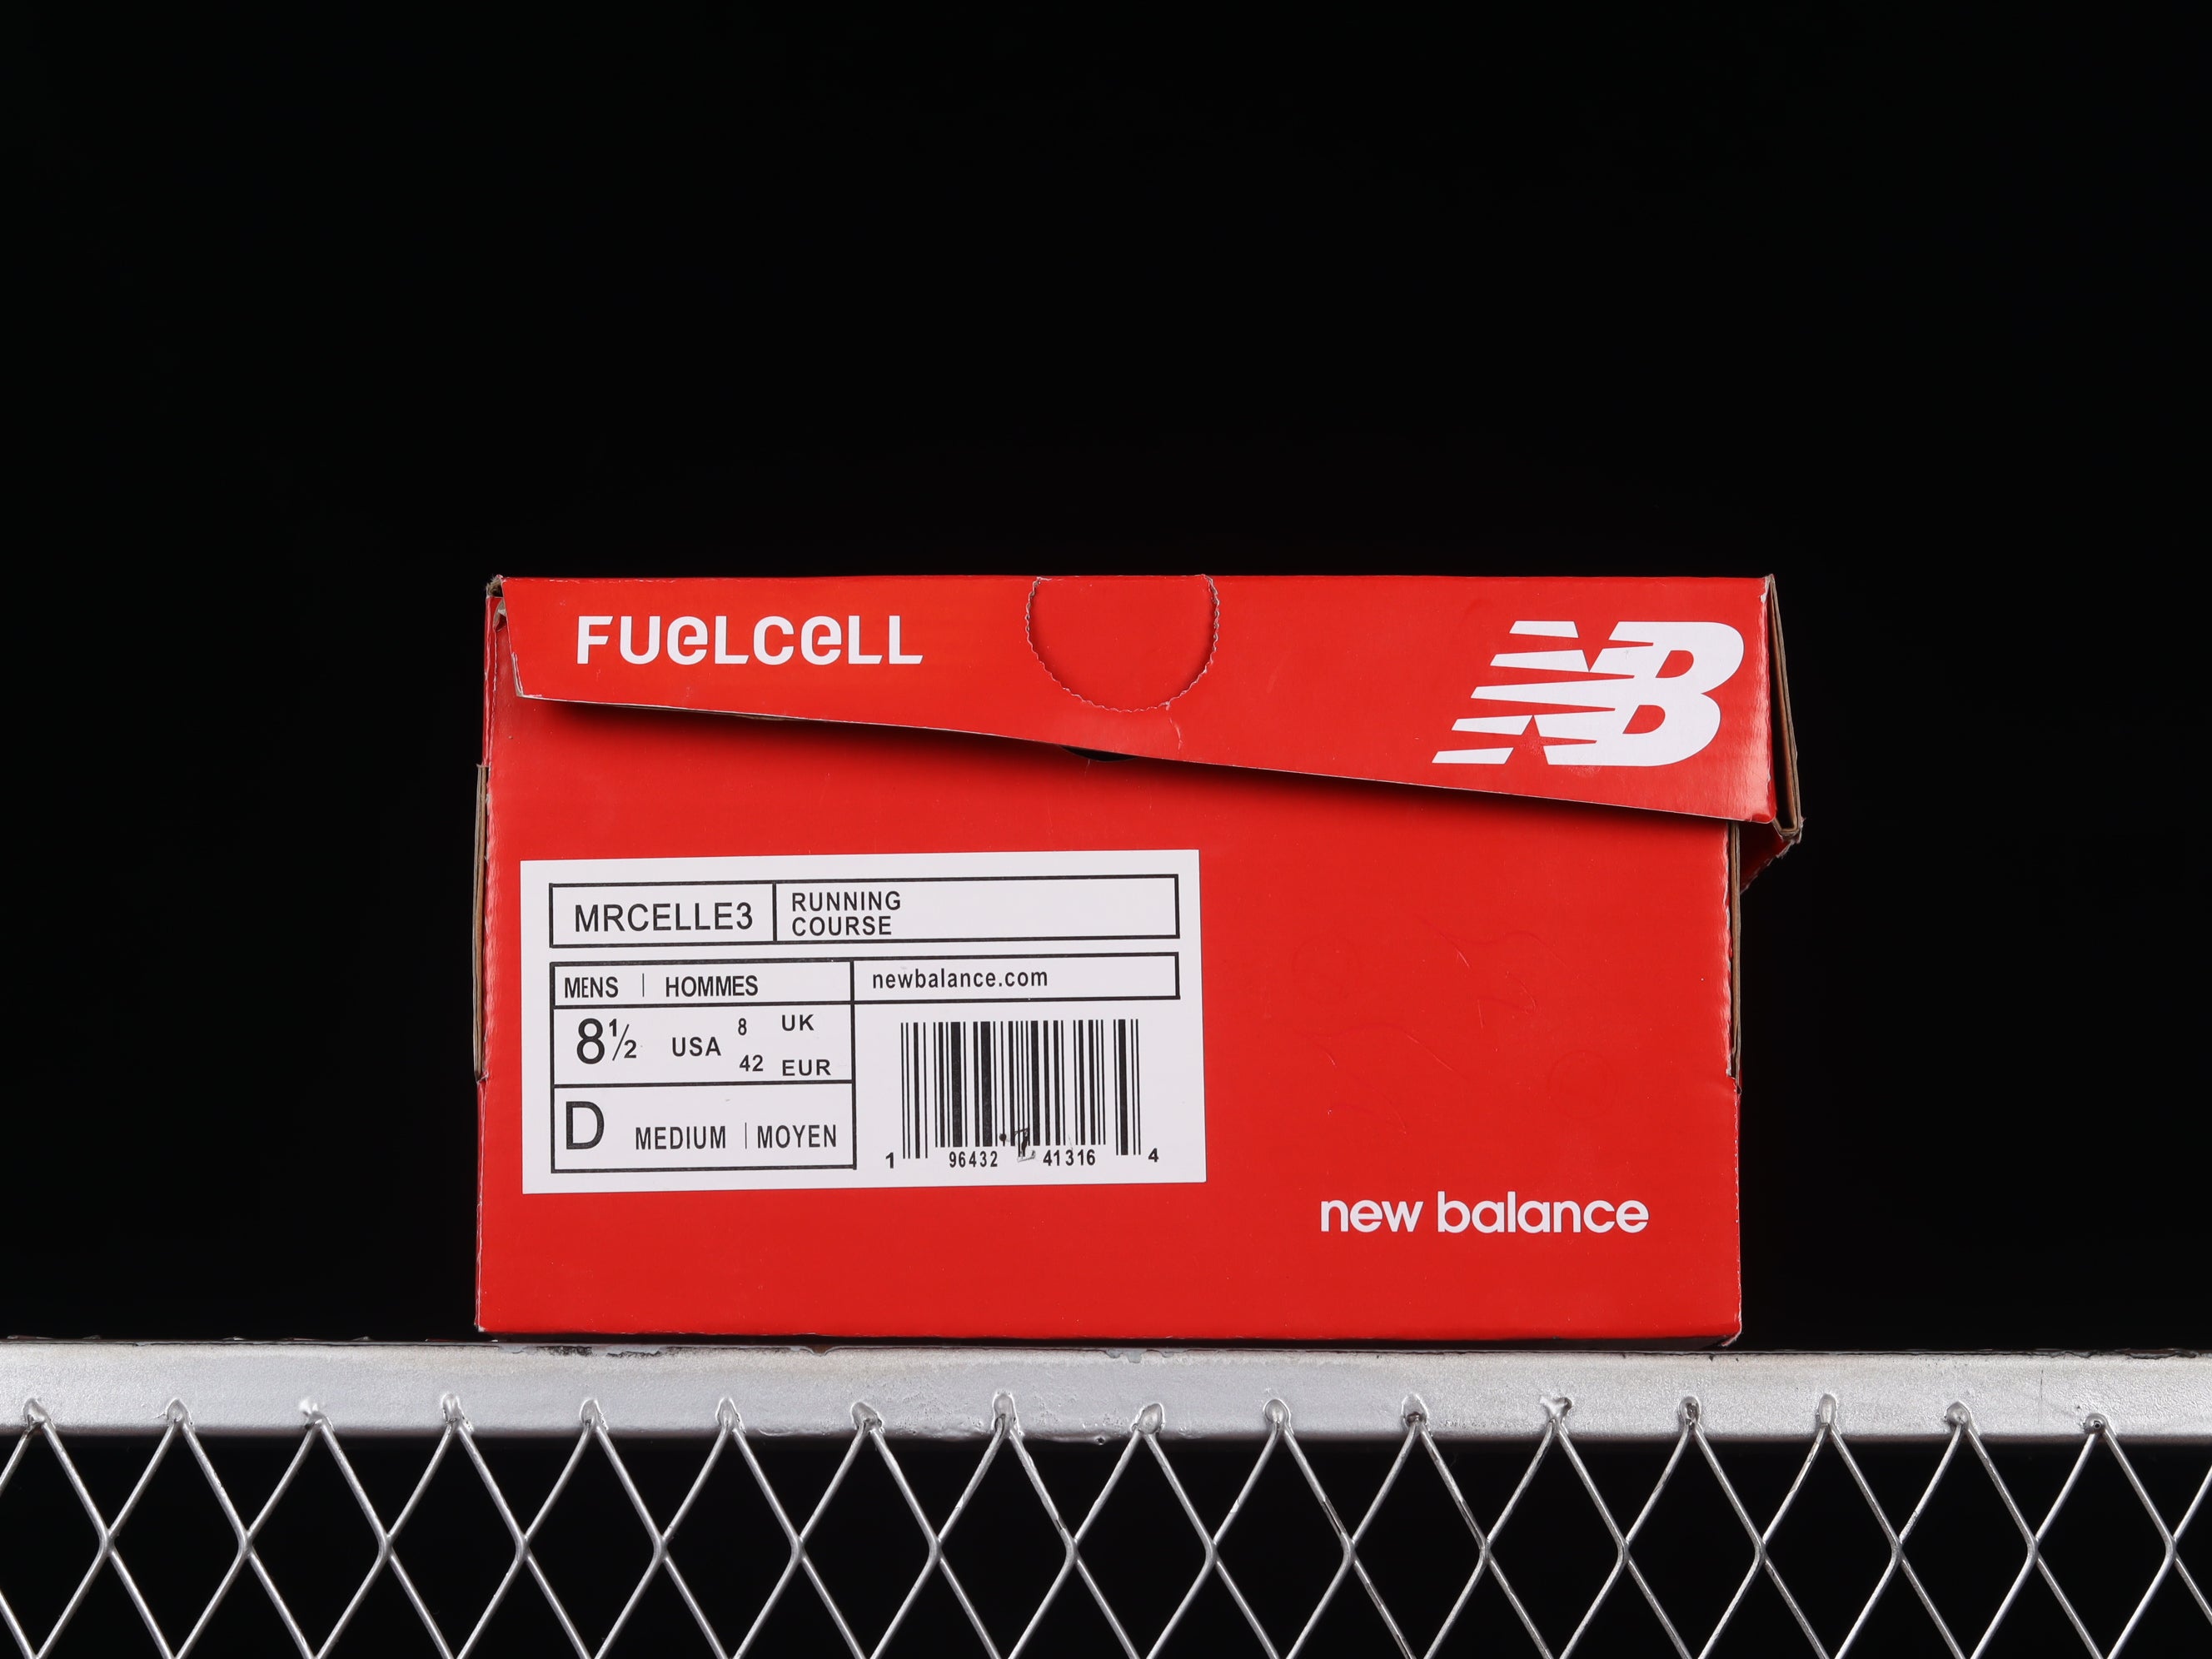 New Balance Fuel cell - Elite